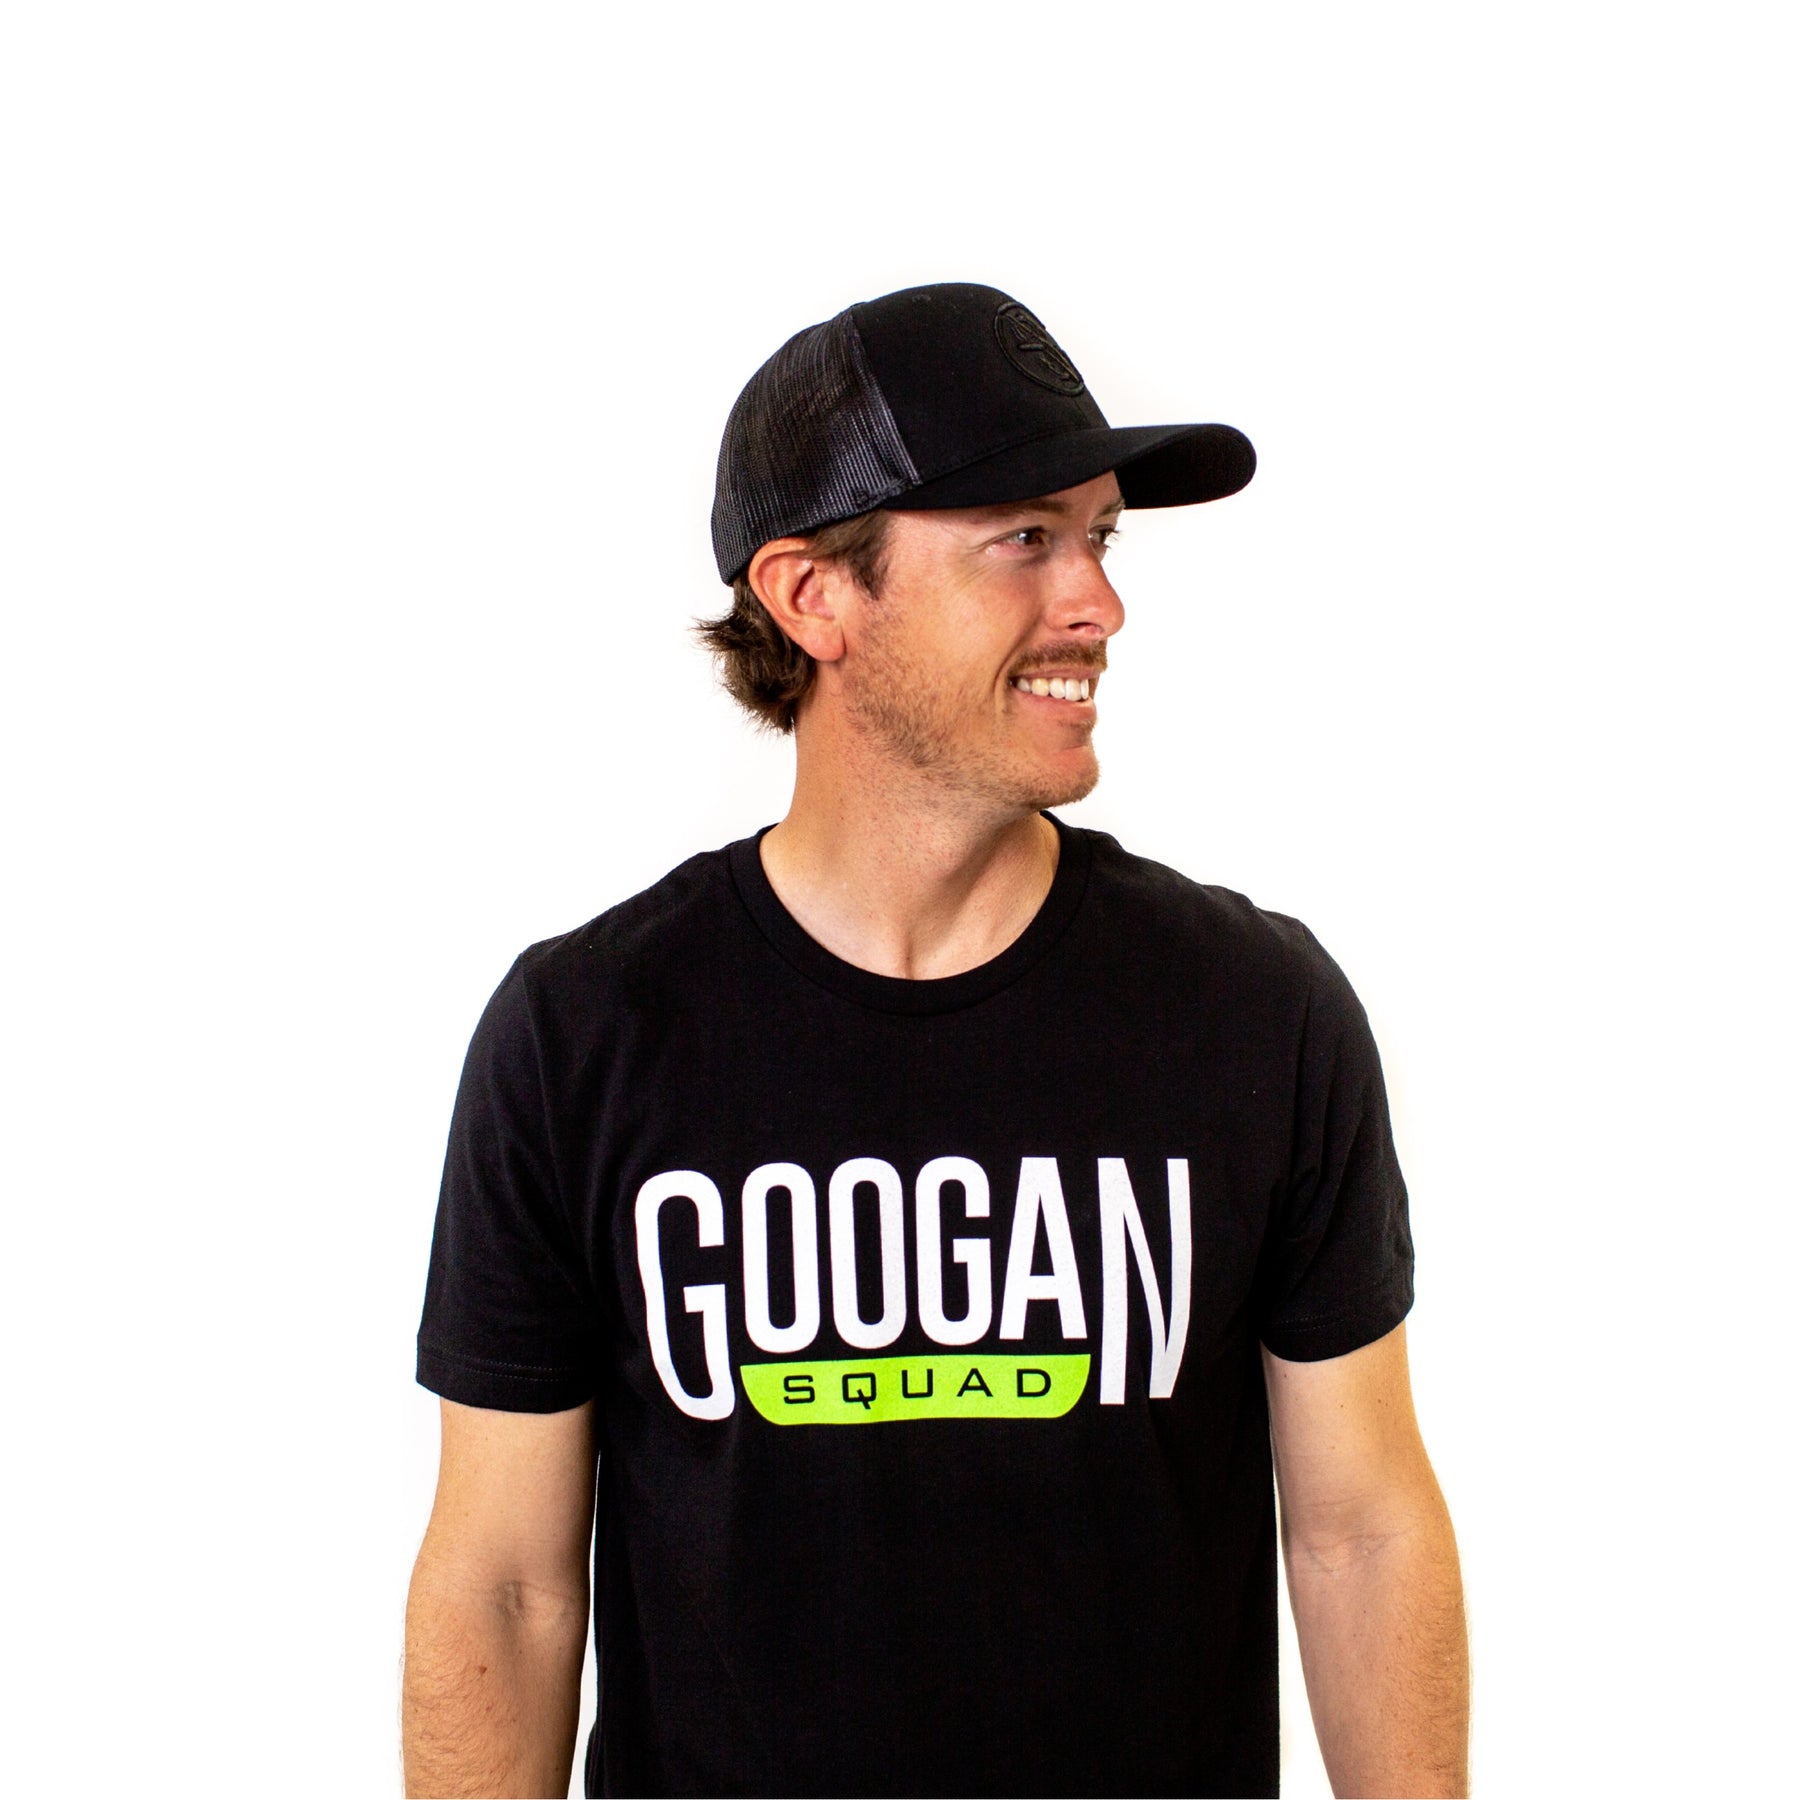  Googan Squad Shirts